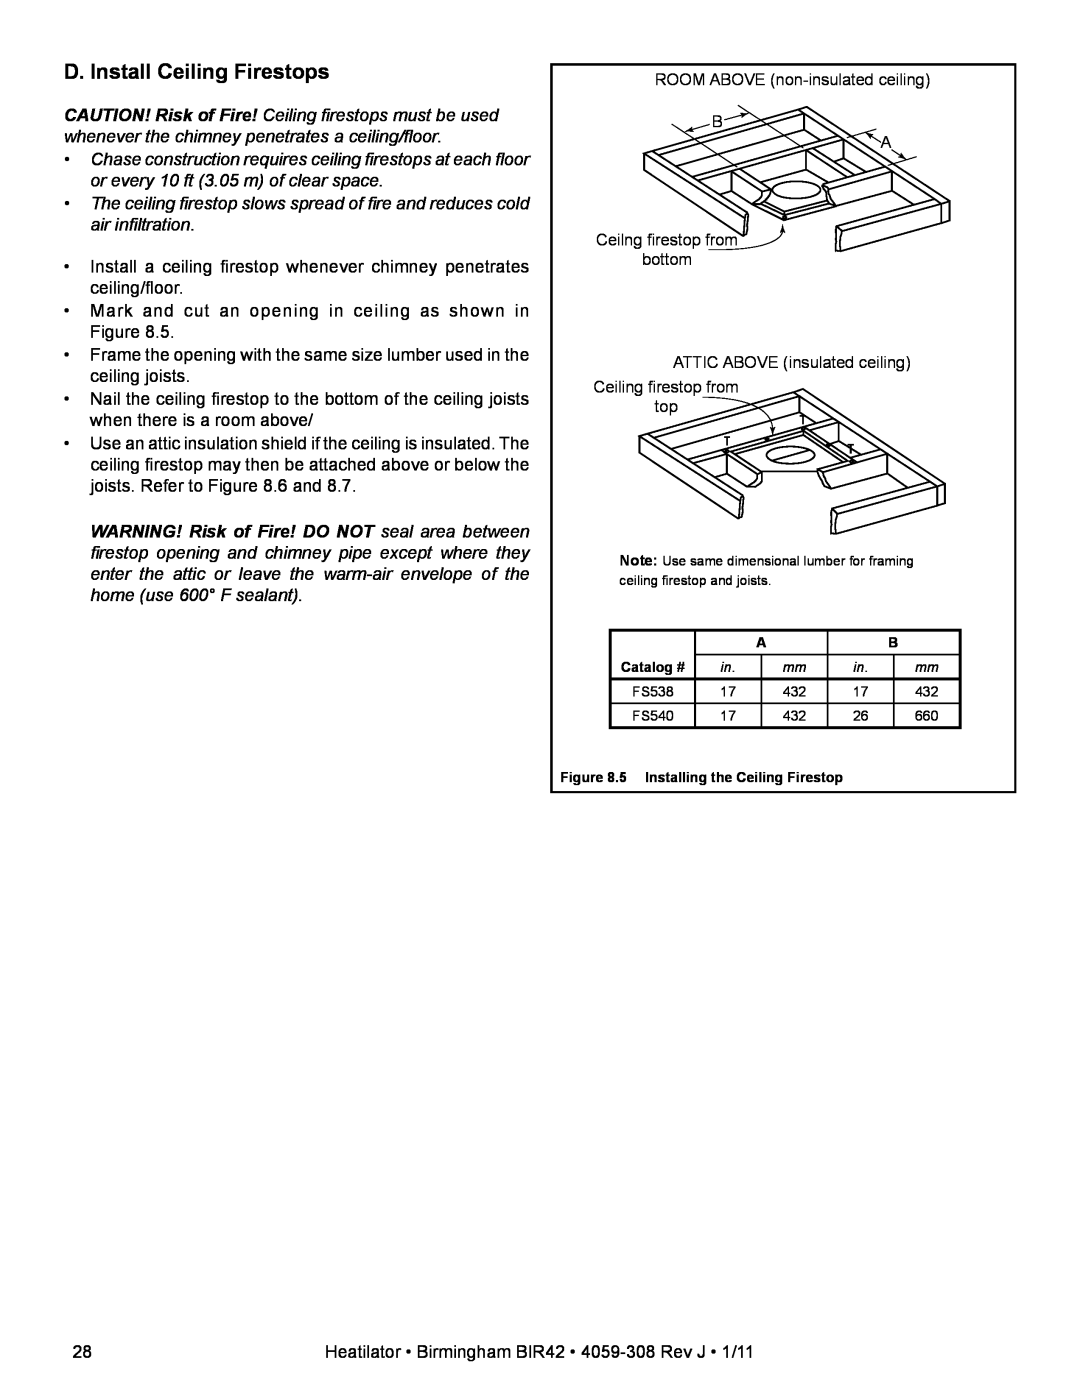 Heatiator BIR42 owner manual D. Install Ceiling Firestops 